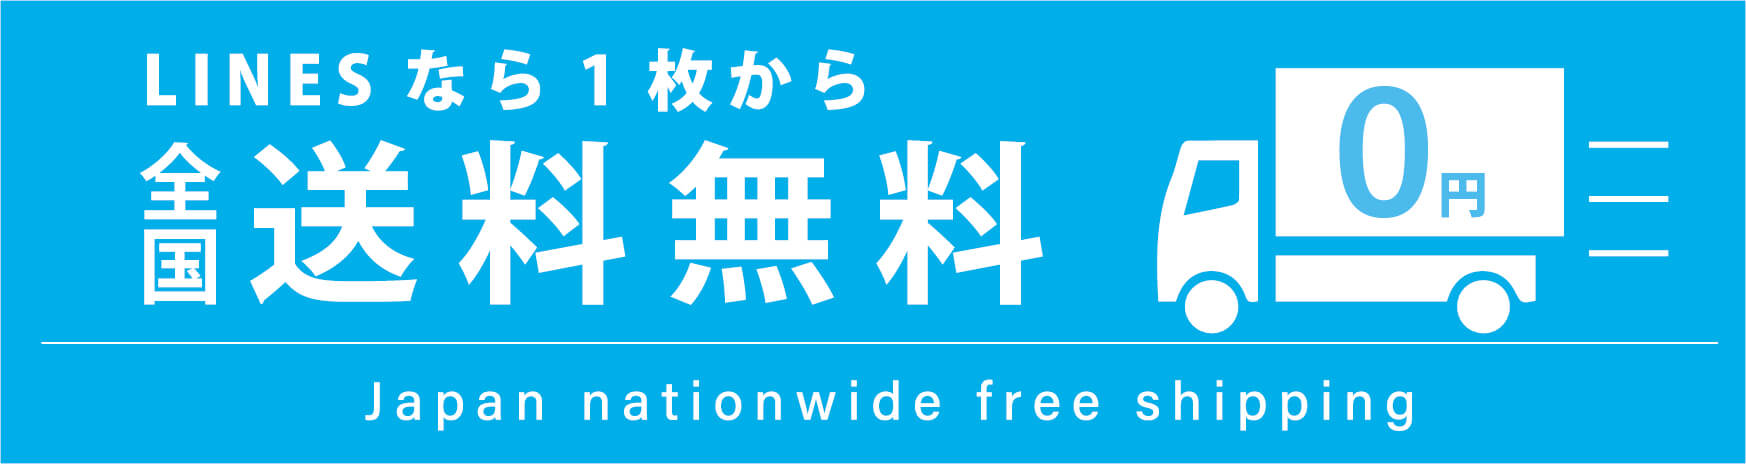 Japan nationwide free shipping